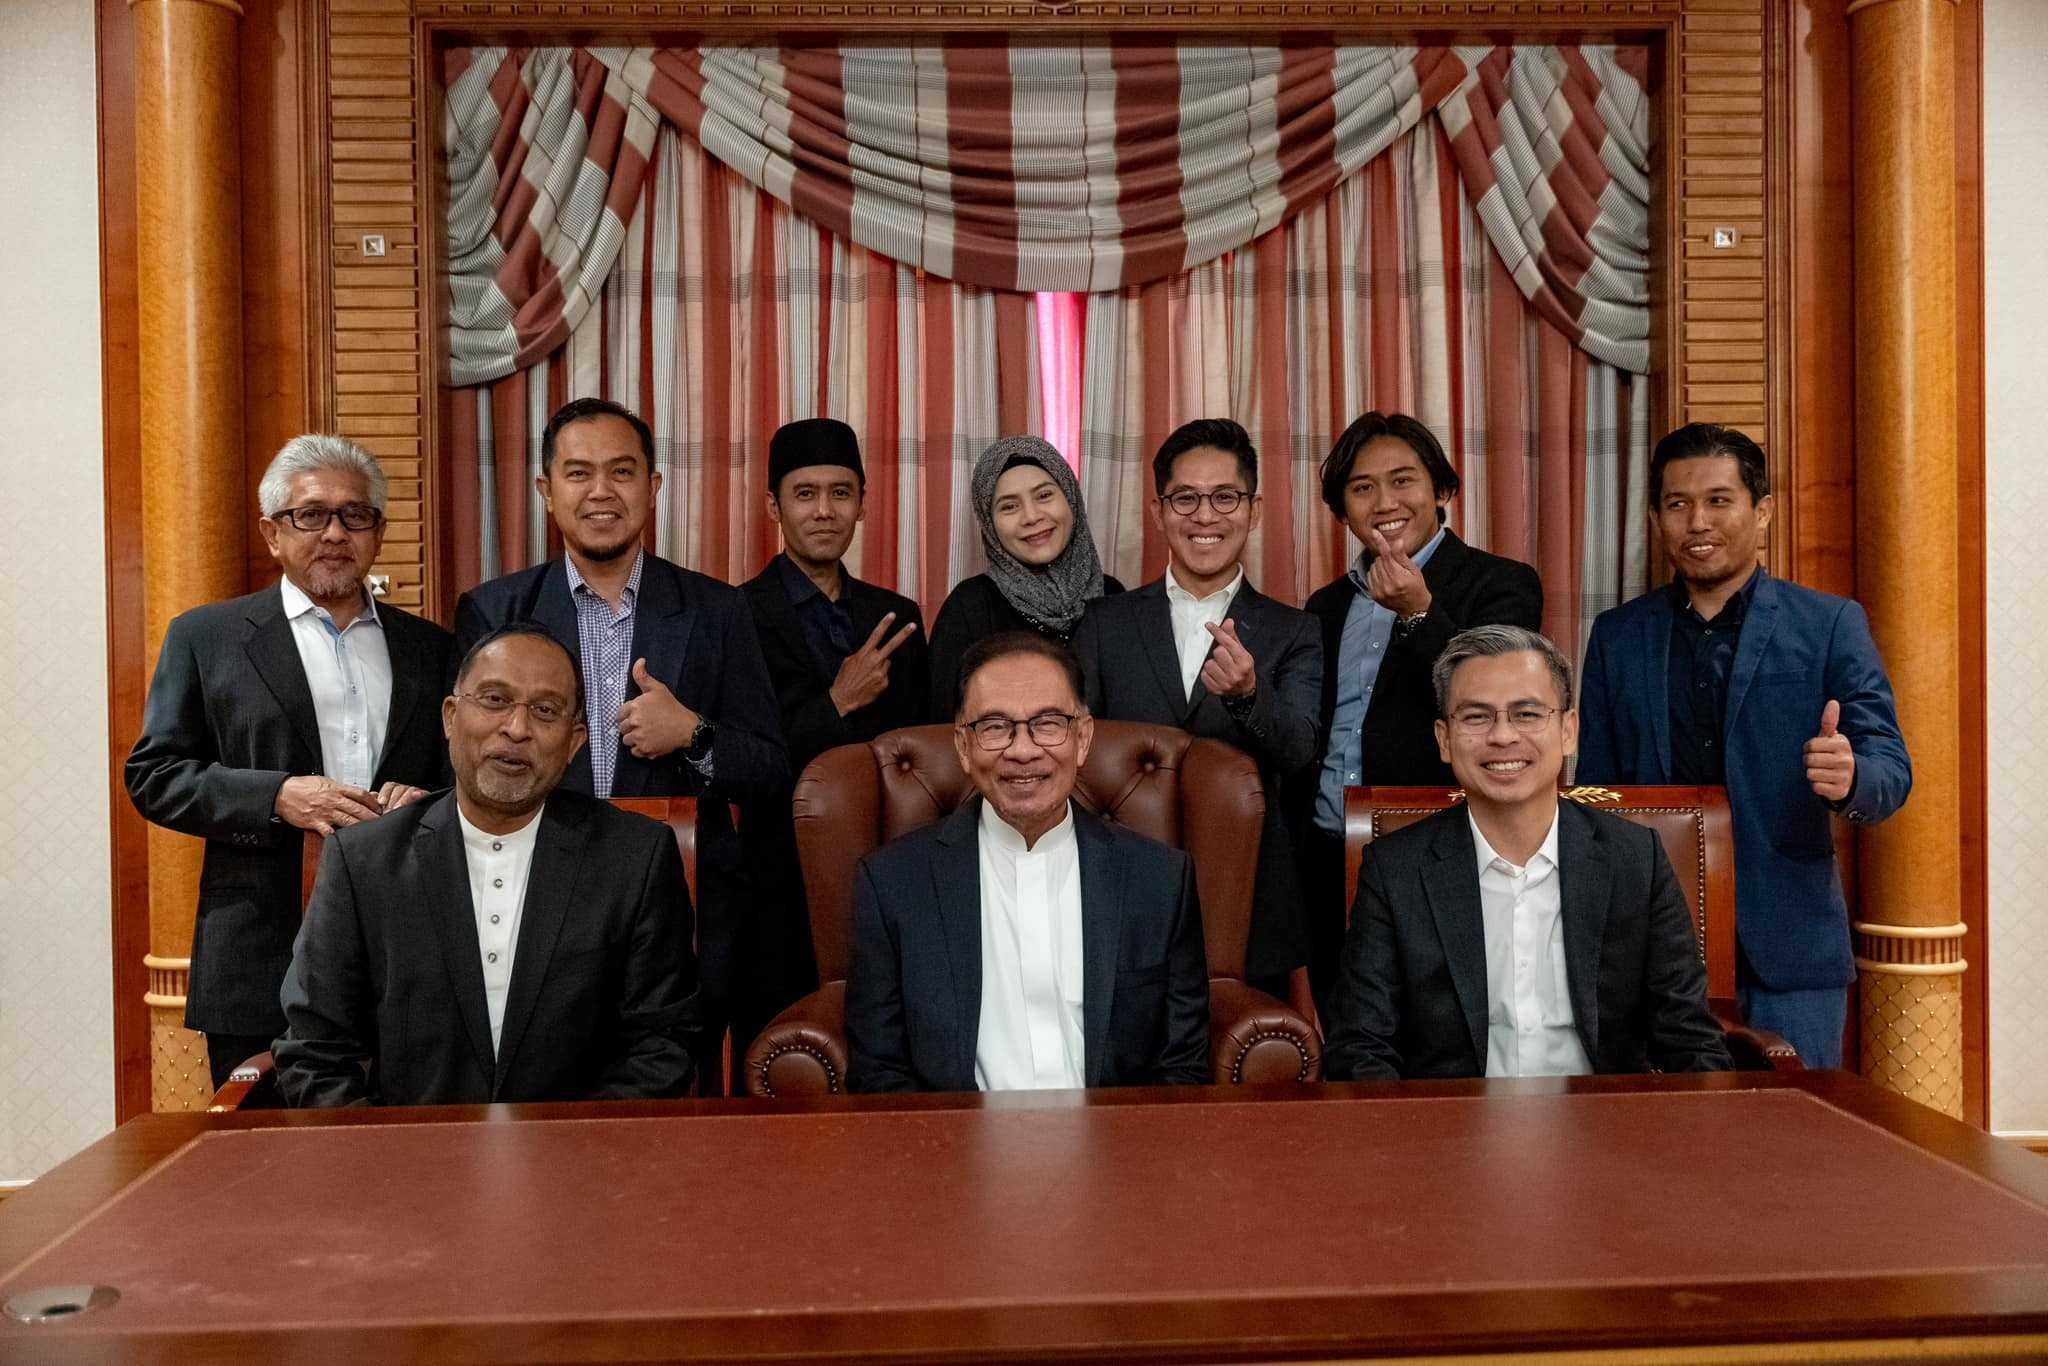 Perdana Menteri Anwar Ibrahim bersama menteri dan pegawai yang mengiringinya ke Arab Saudi, di mana pertemuan yang dijadualkan dengan ketua ‘de facto’ kerajaan itu tidak menjadi kenyataan. Gambar: Facebook.